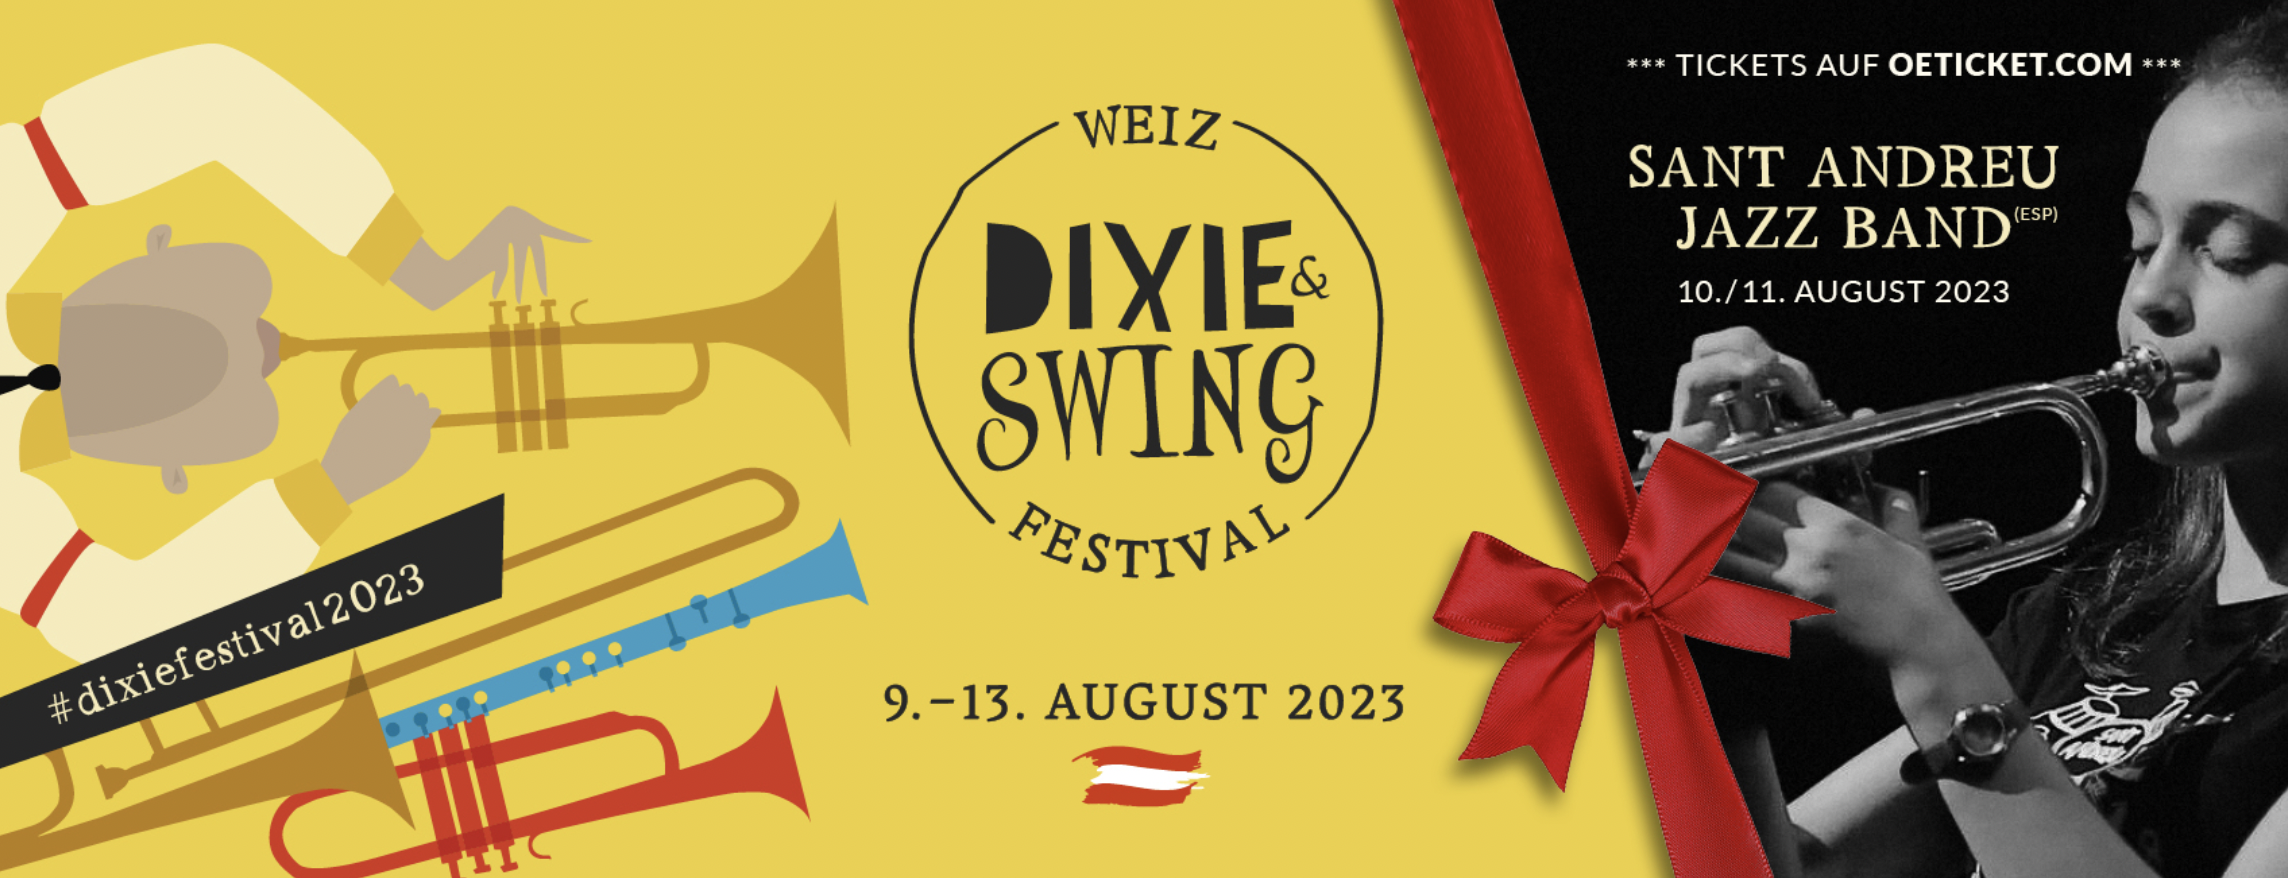 Dixie & Swing Festival 2023 am 9. August 2023 @ Kunsthaus Weiz.